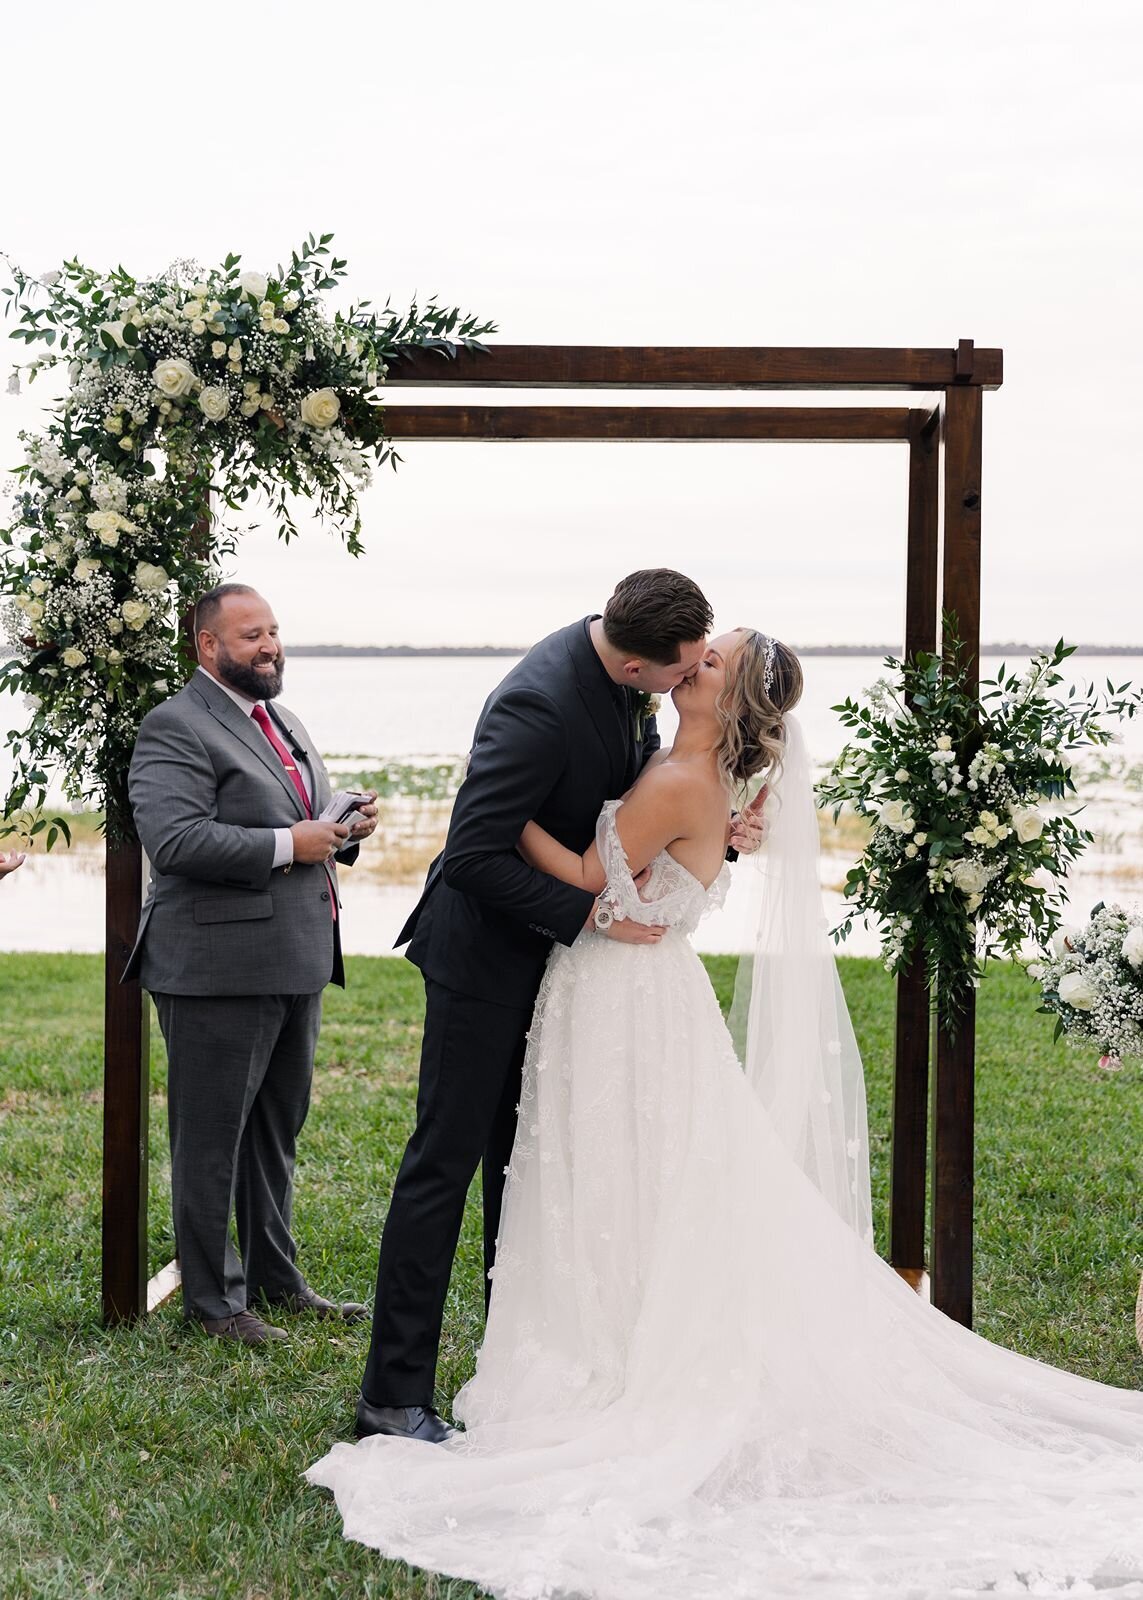 Groom and Bride first kiss wedding Ceremony at Bella Cosa, Lake Wales, Florida